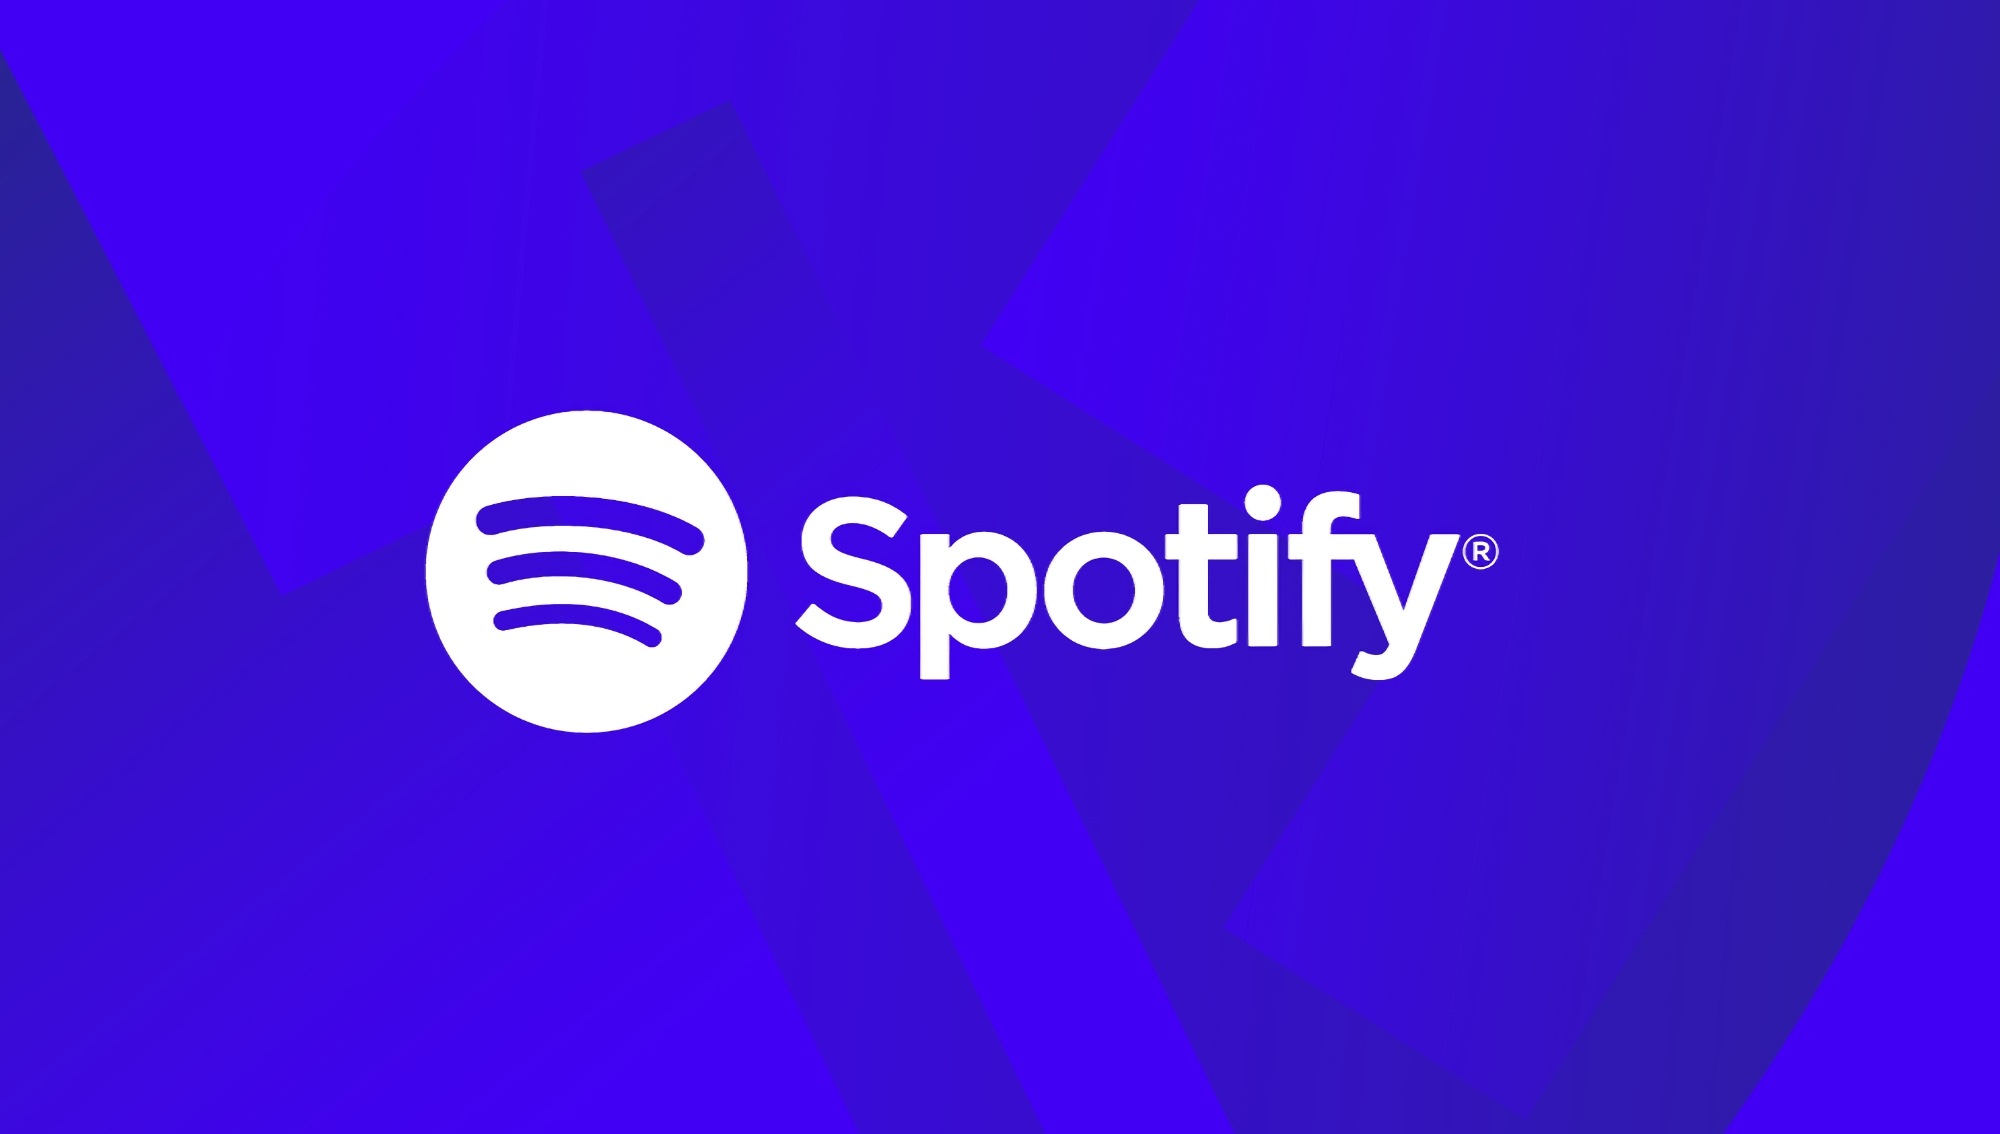 Spotify øker prisen på Premium-abonnementer i 53 land over hele verden